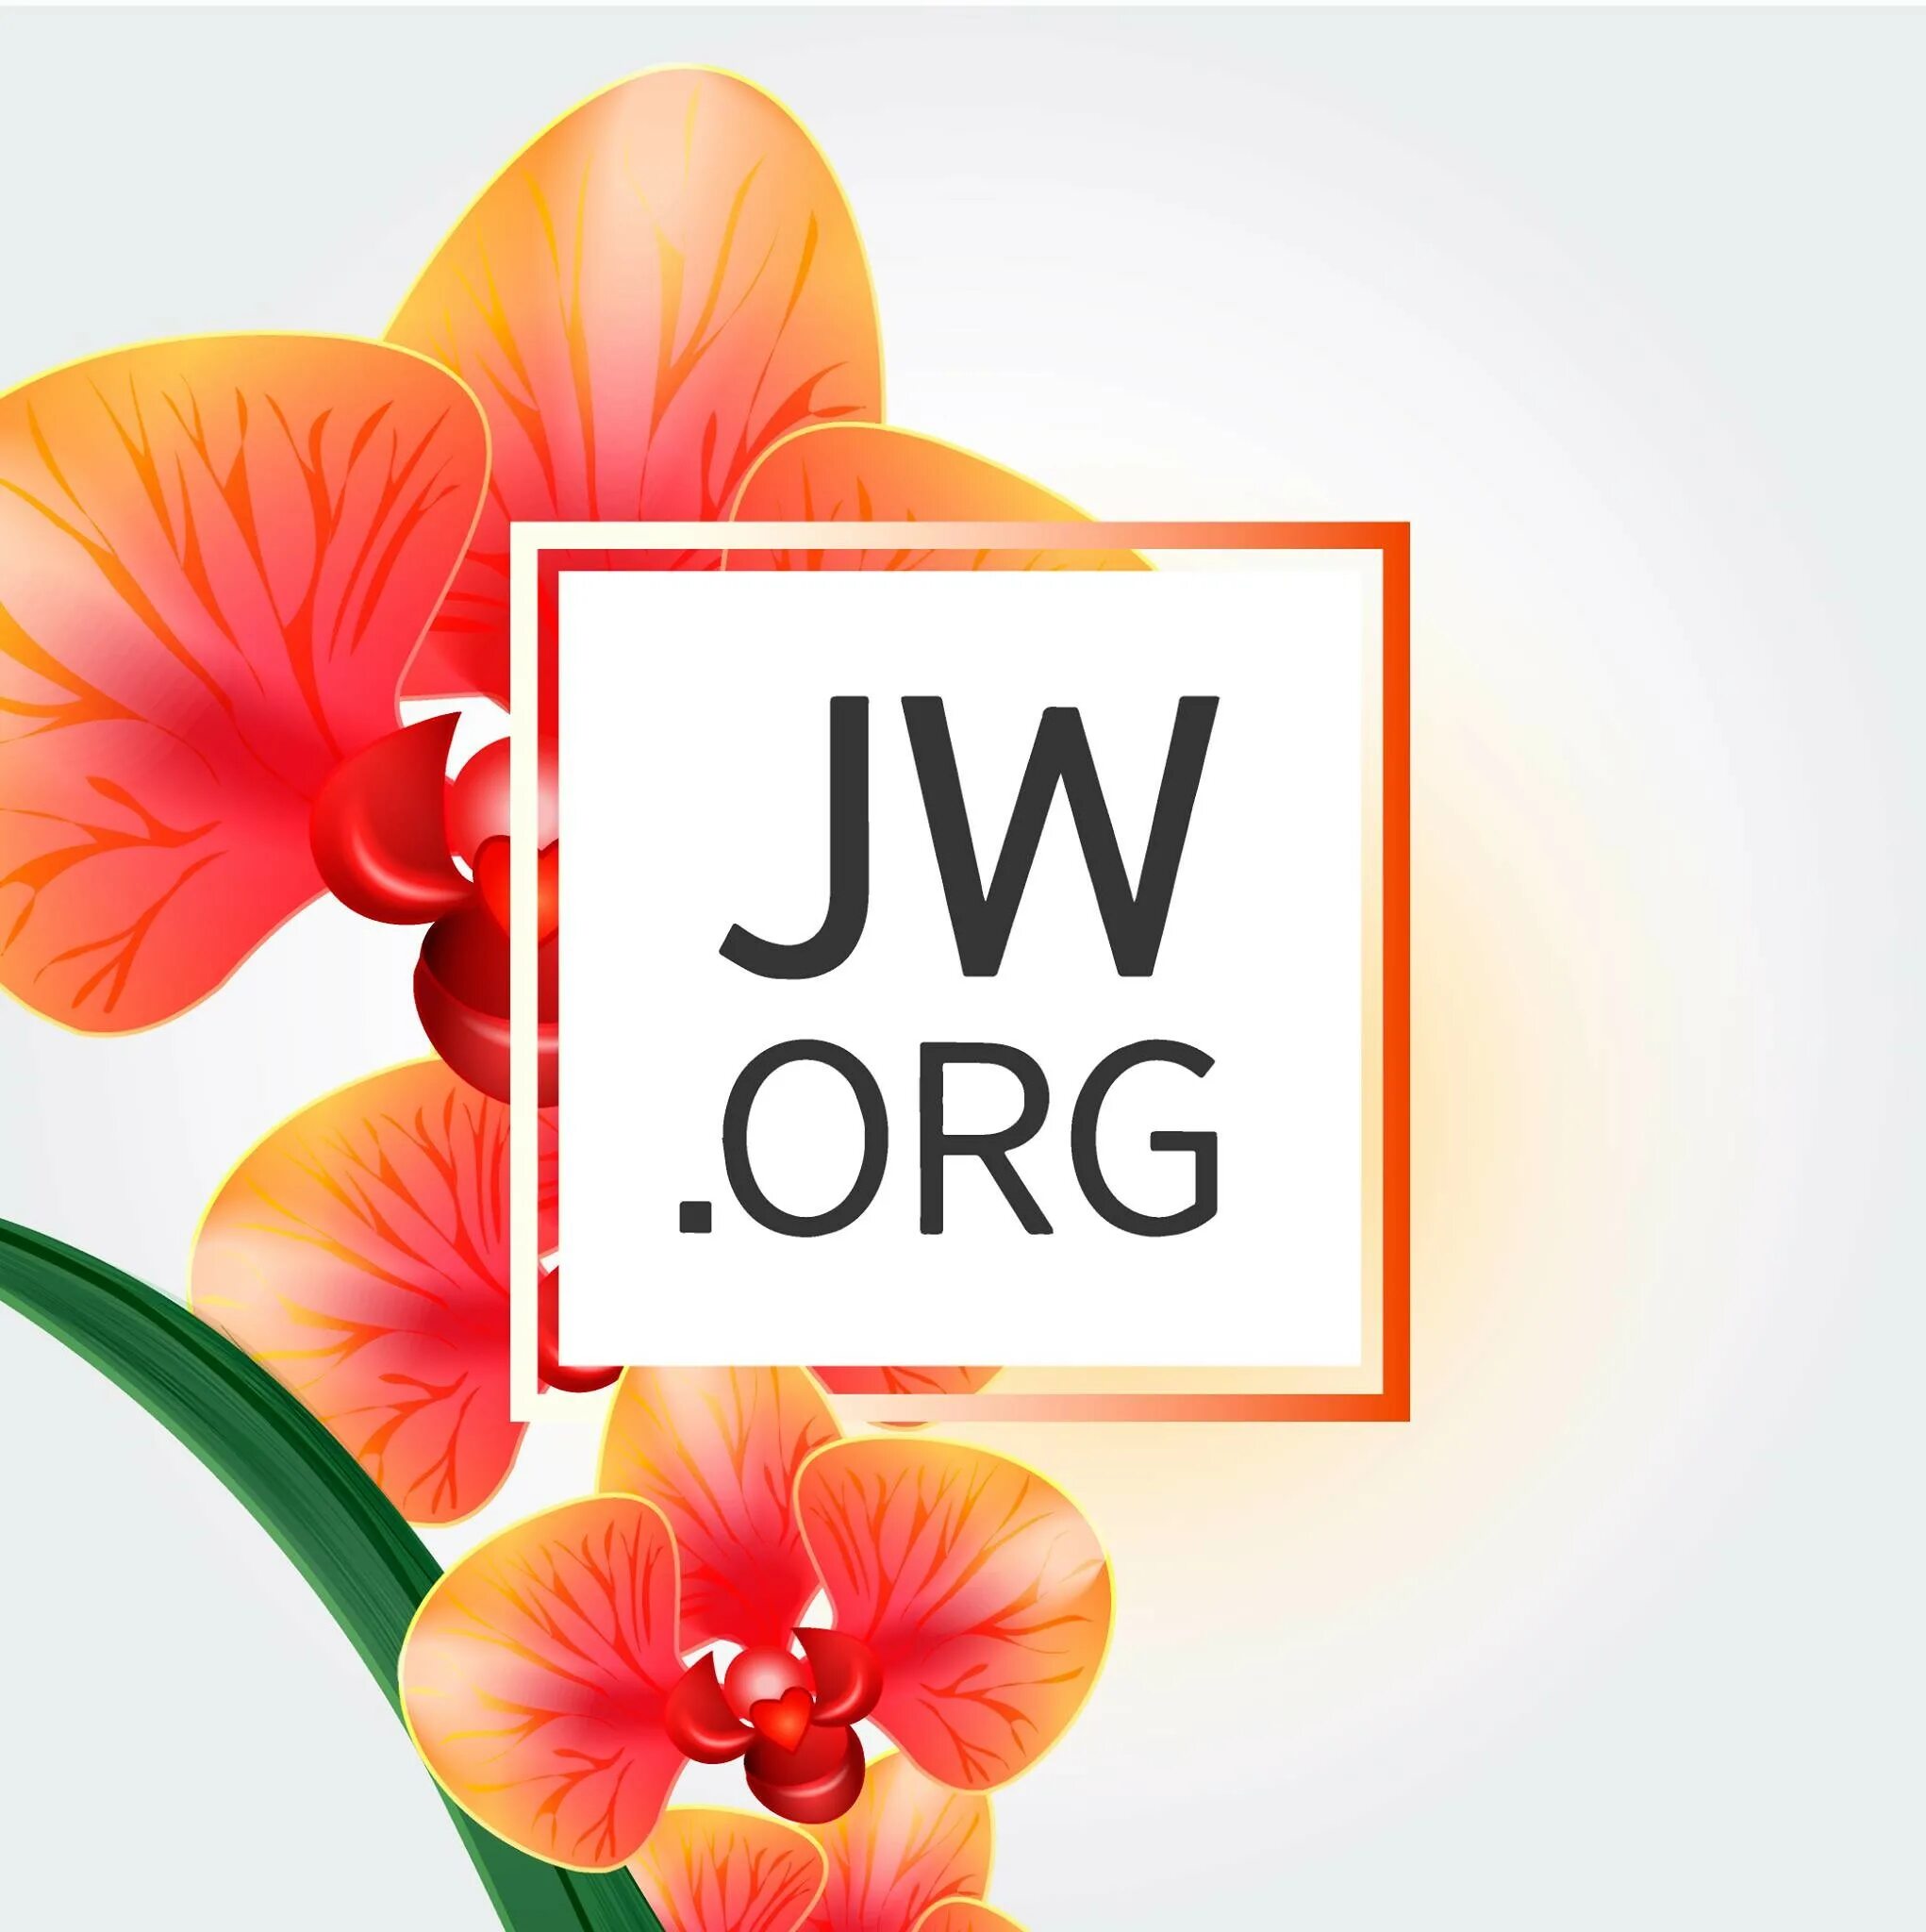 JW org. JW лого. JW org Wallpaper. Фон JW. Https jw org